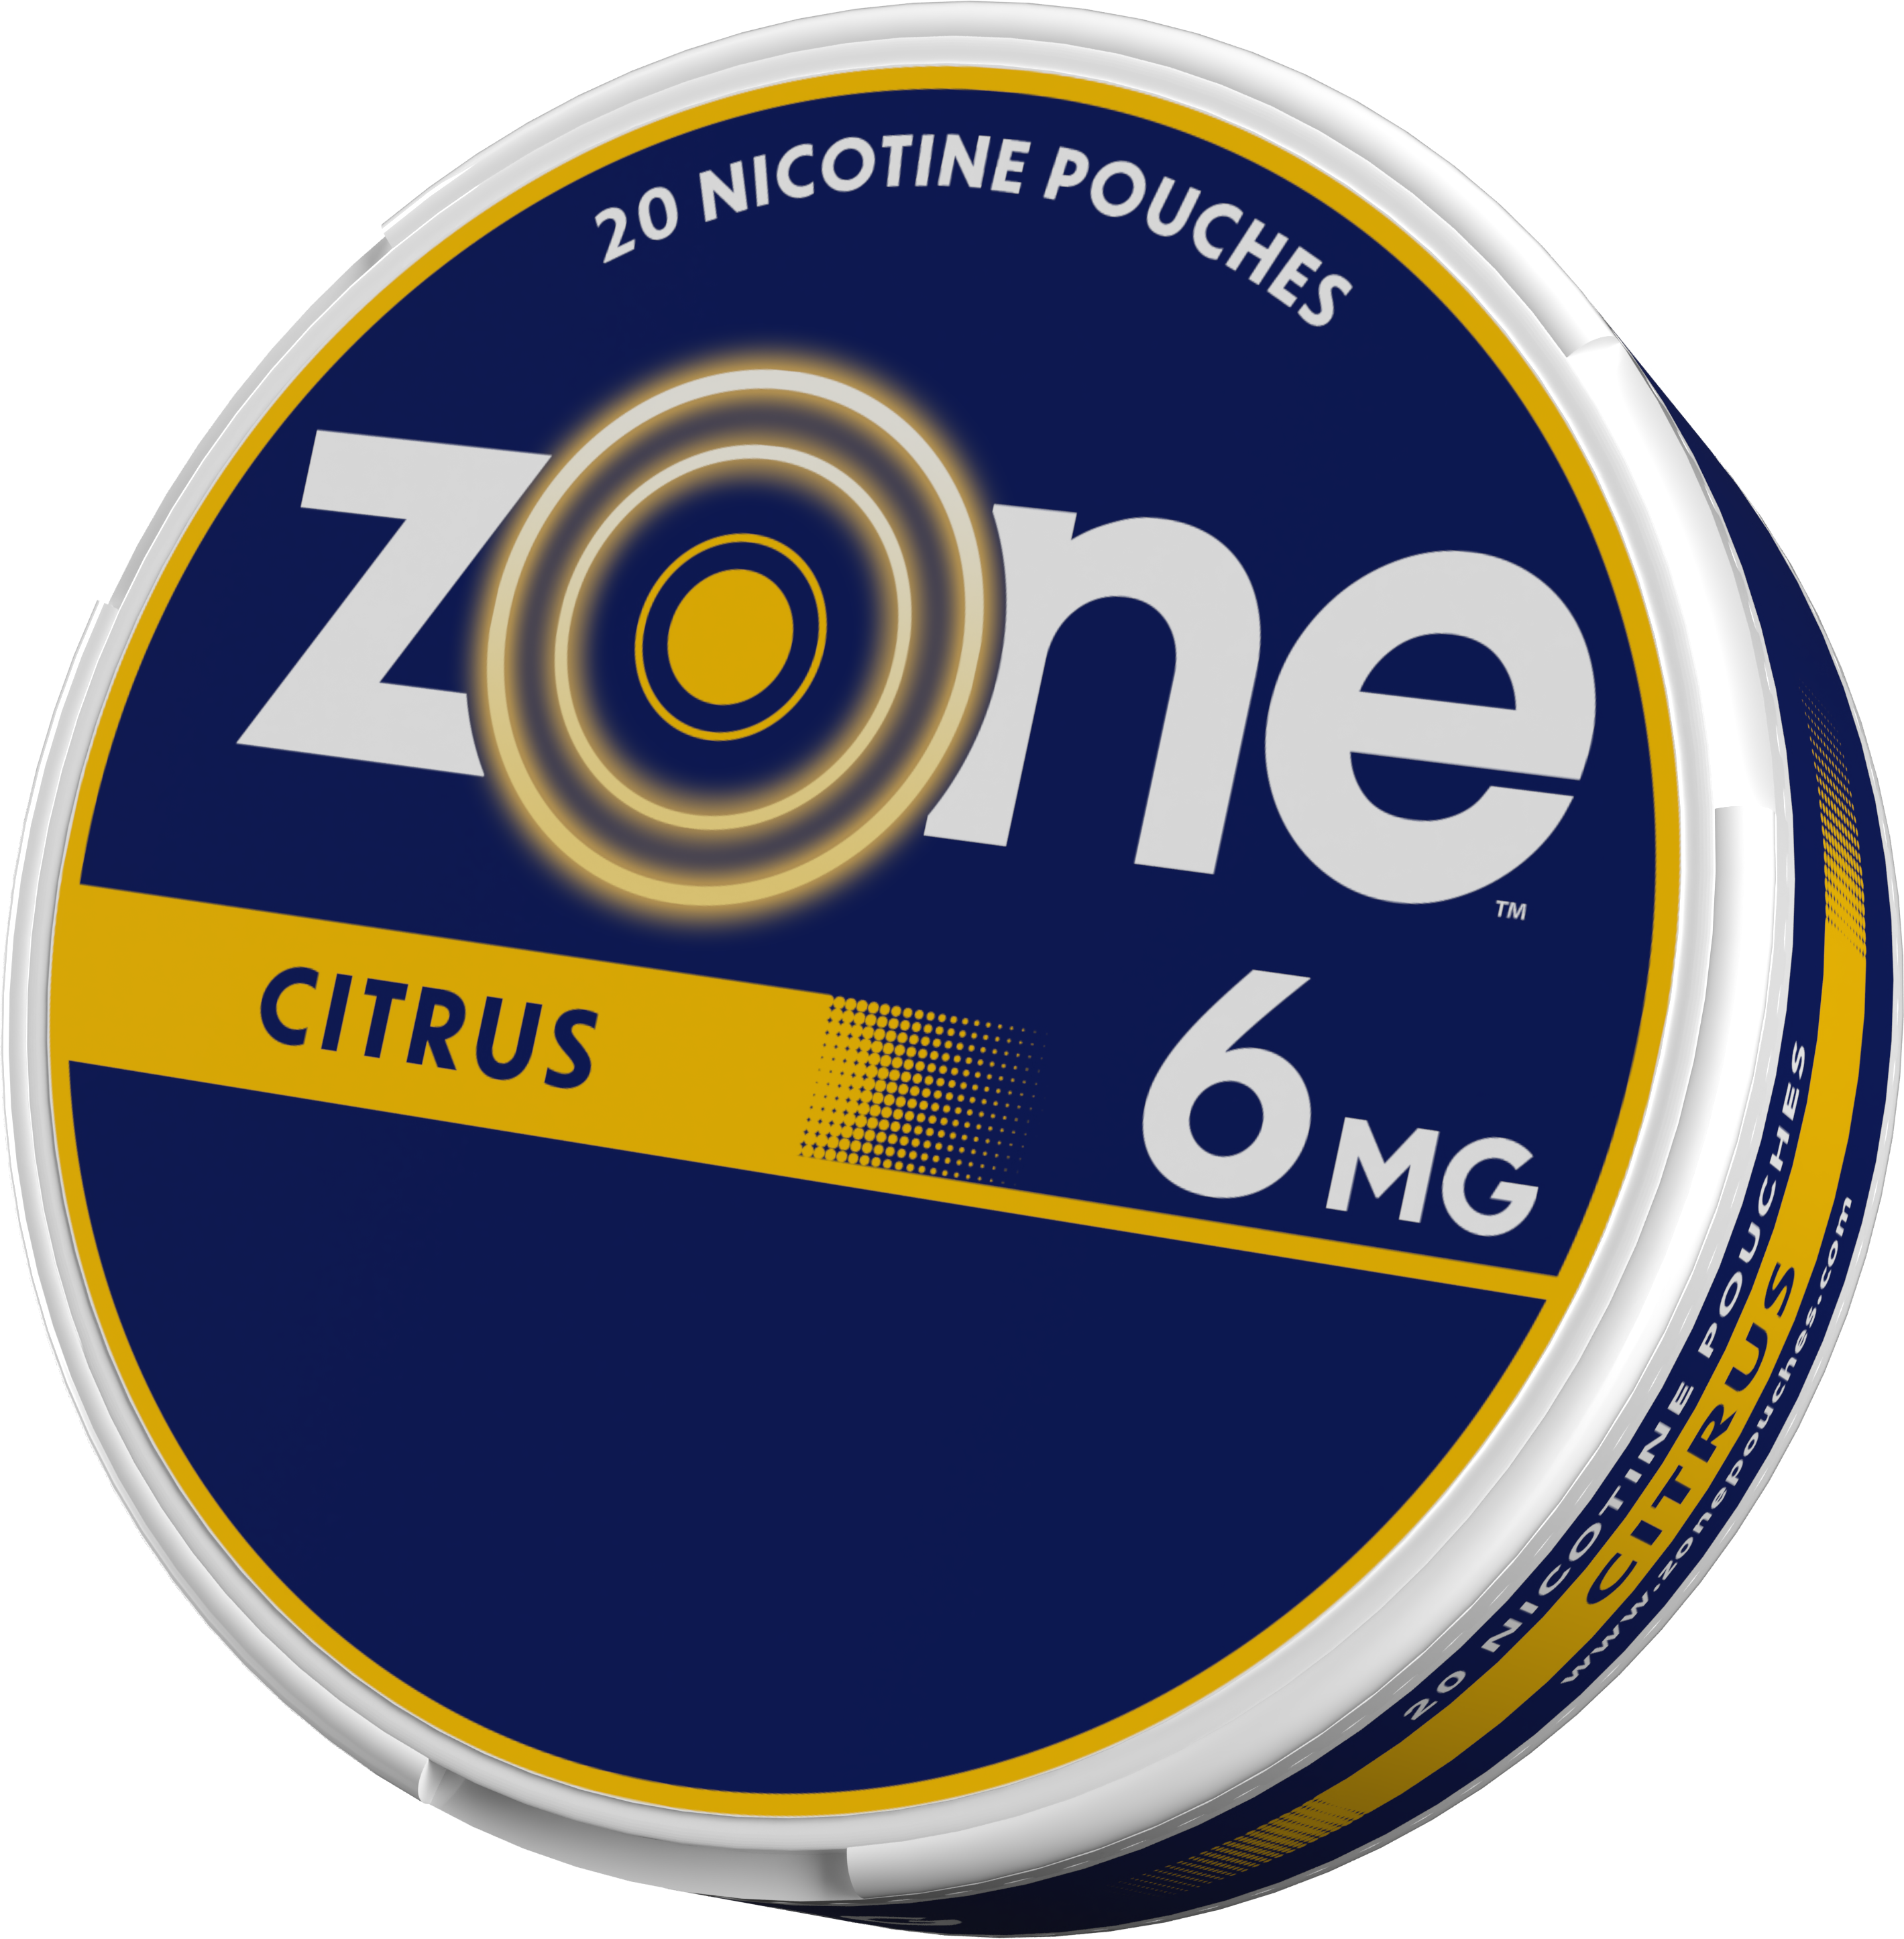 Zone citrus 6mg 5ct